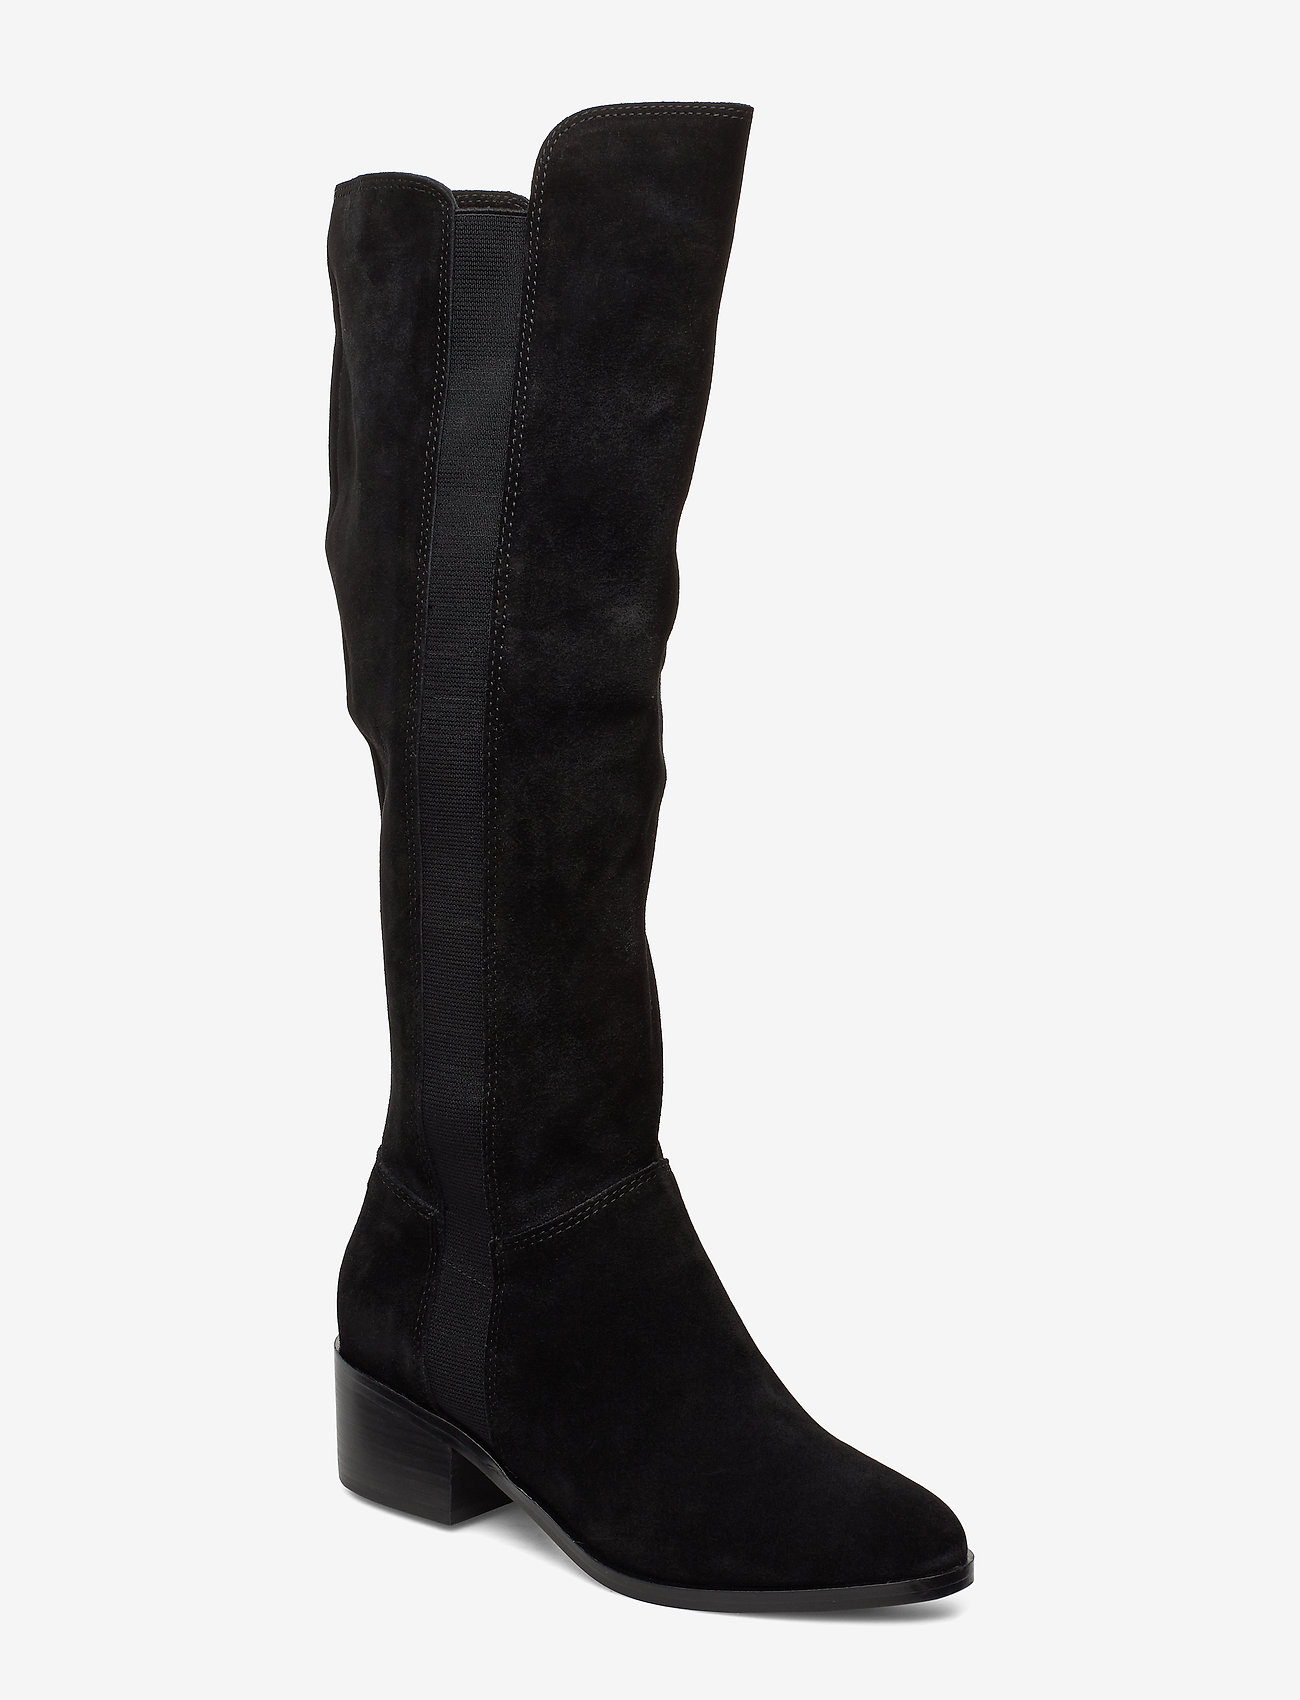 long black suede boots